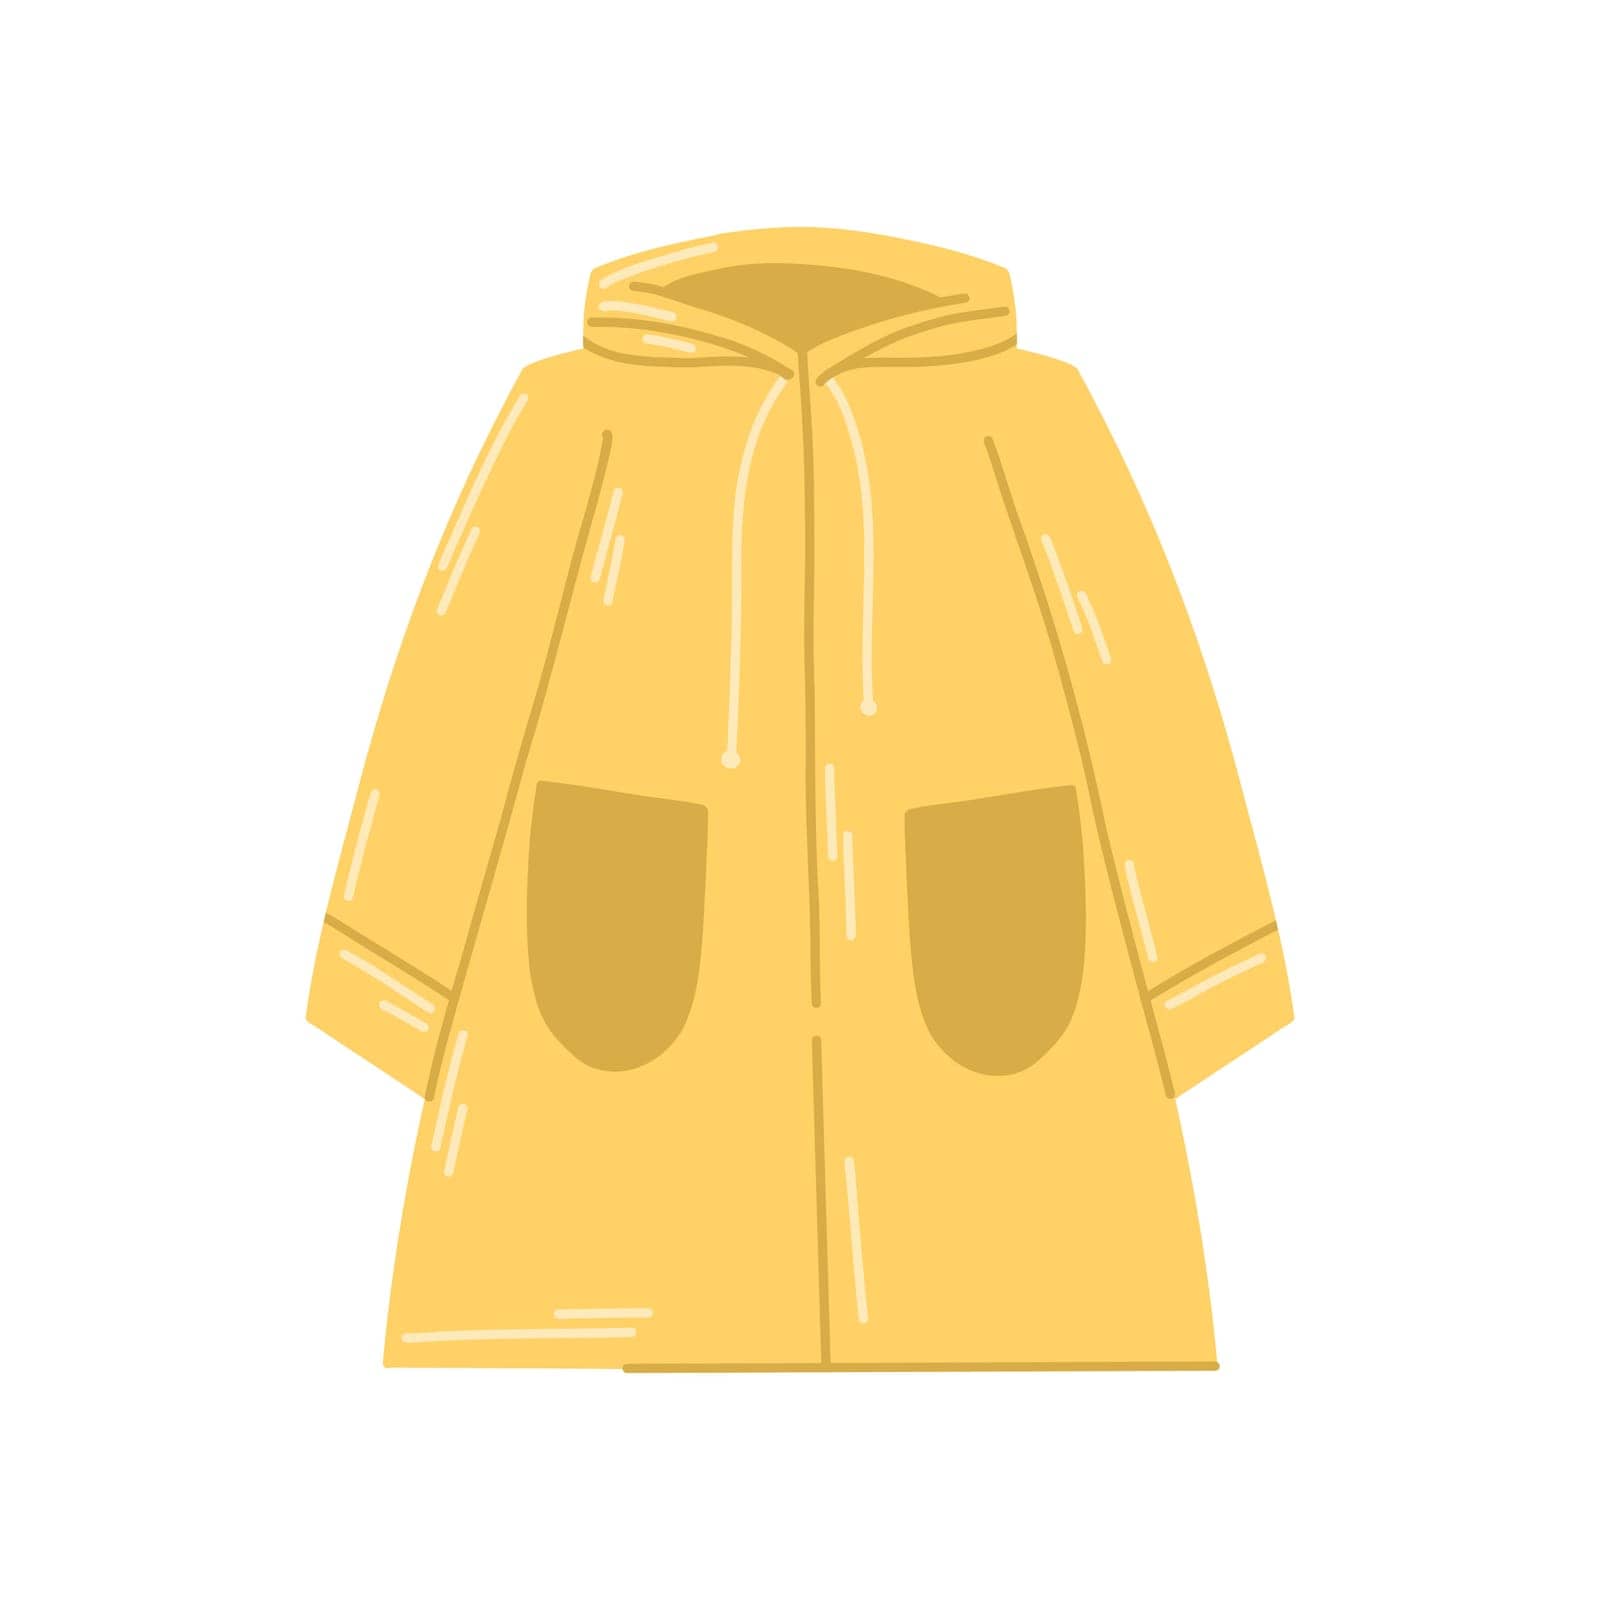 Yellow waterproof raincoat. Coat vector illustration isolated on white background. Vector illustration